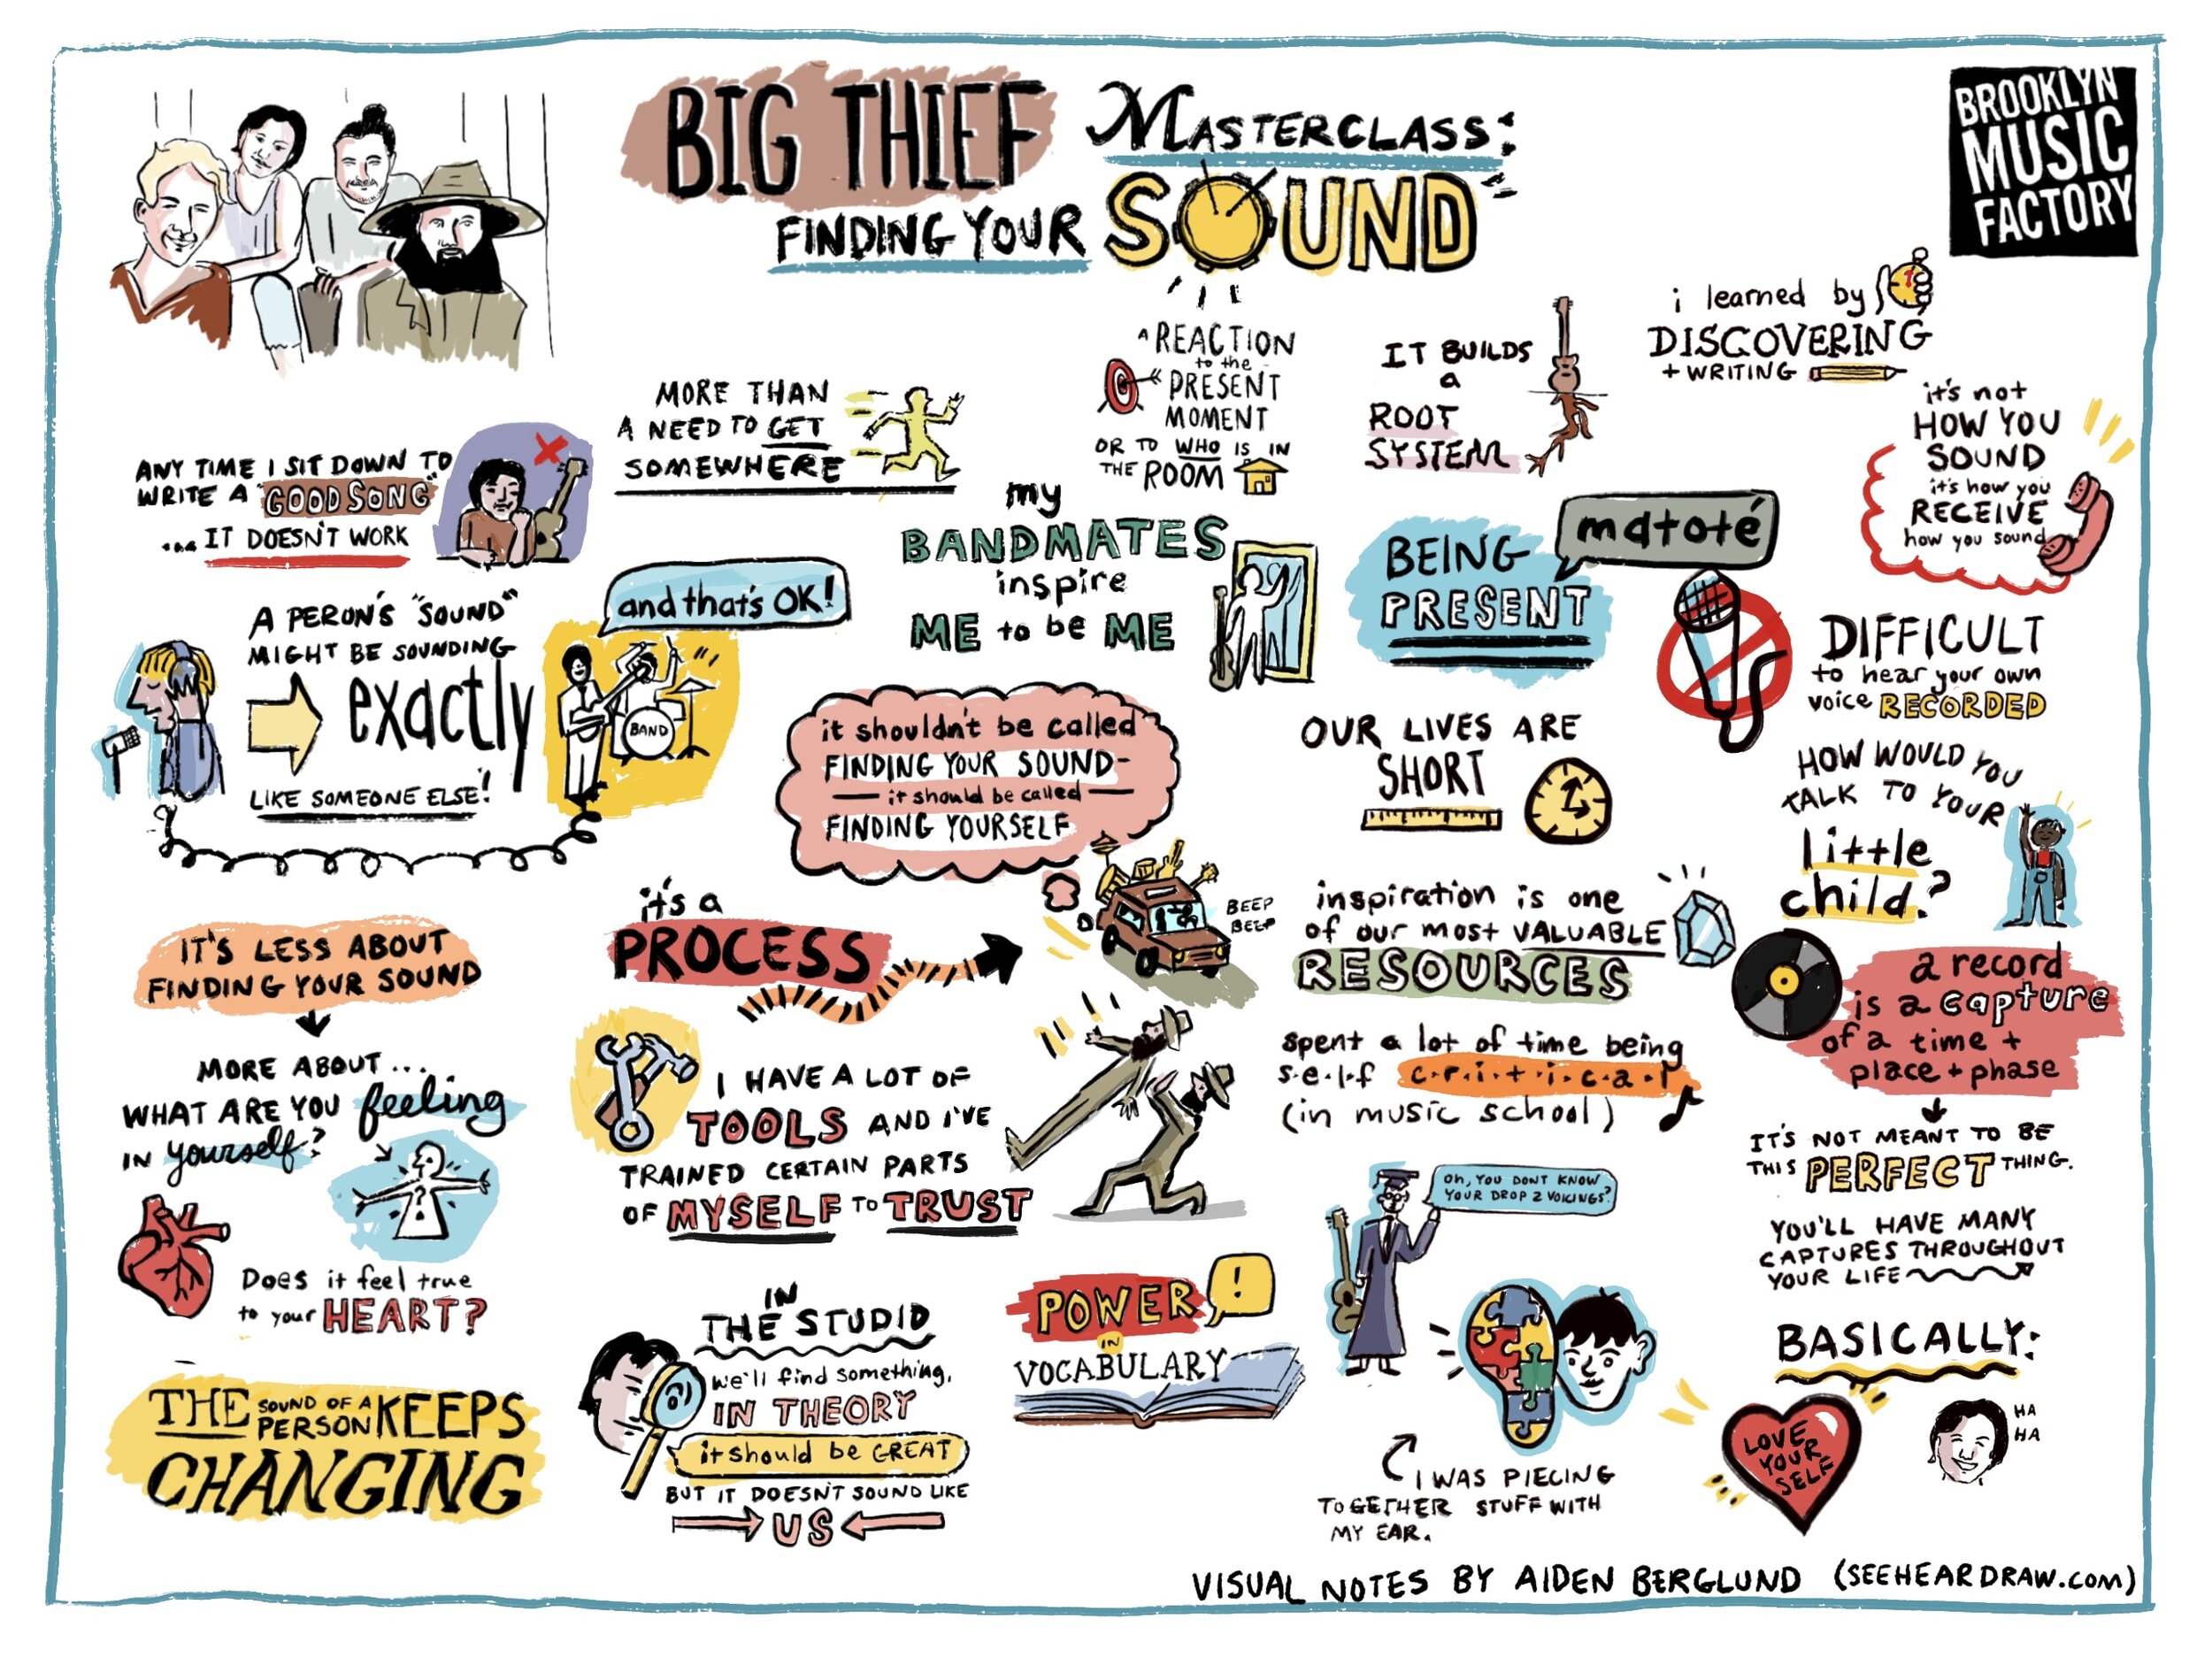 Big Thief Masterclass Illustration.jpg